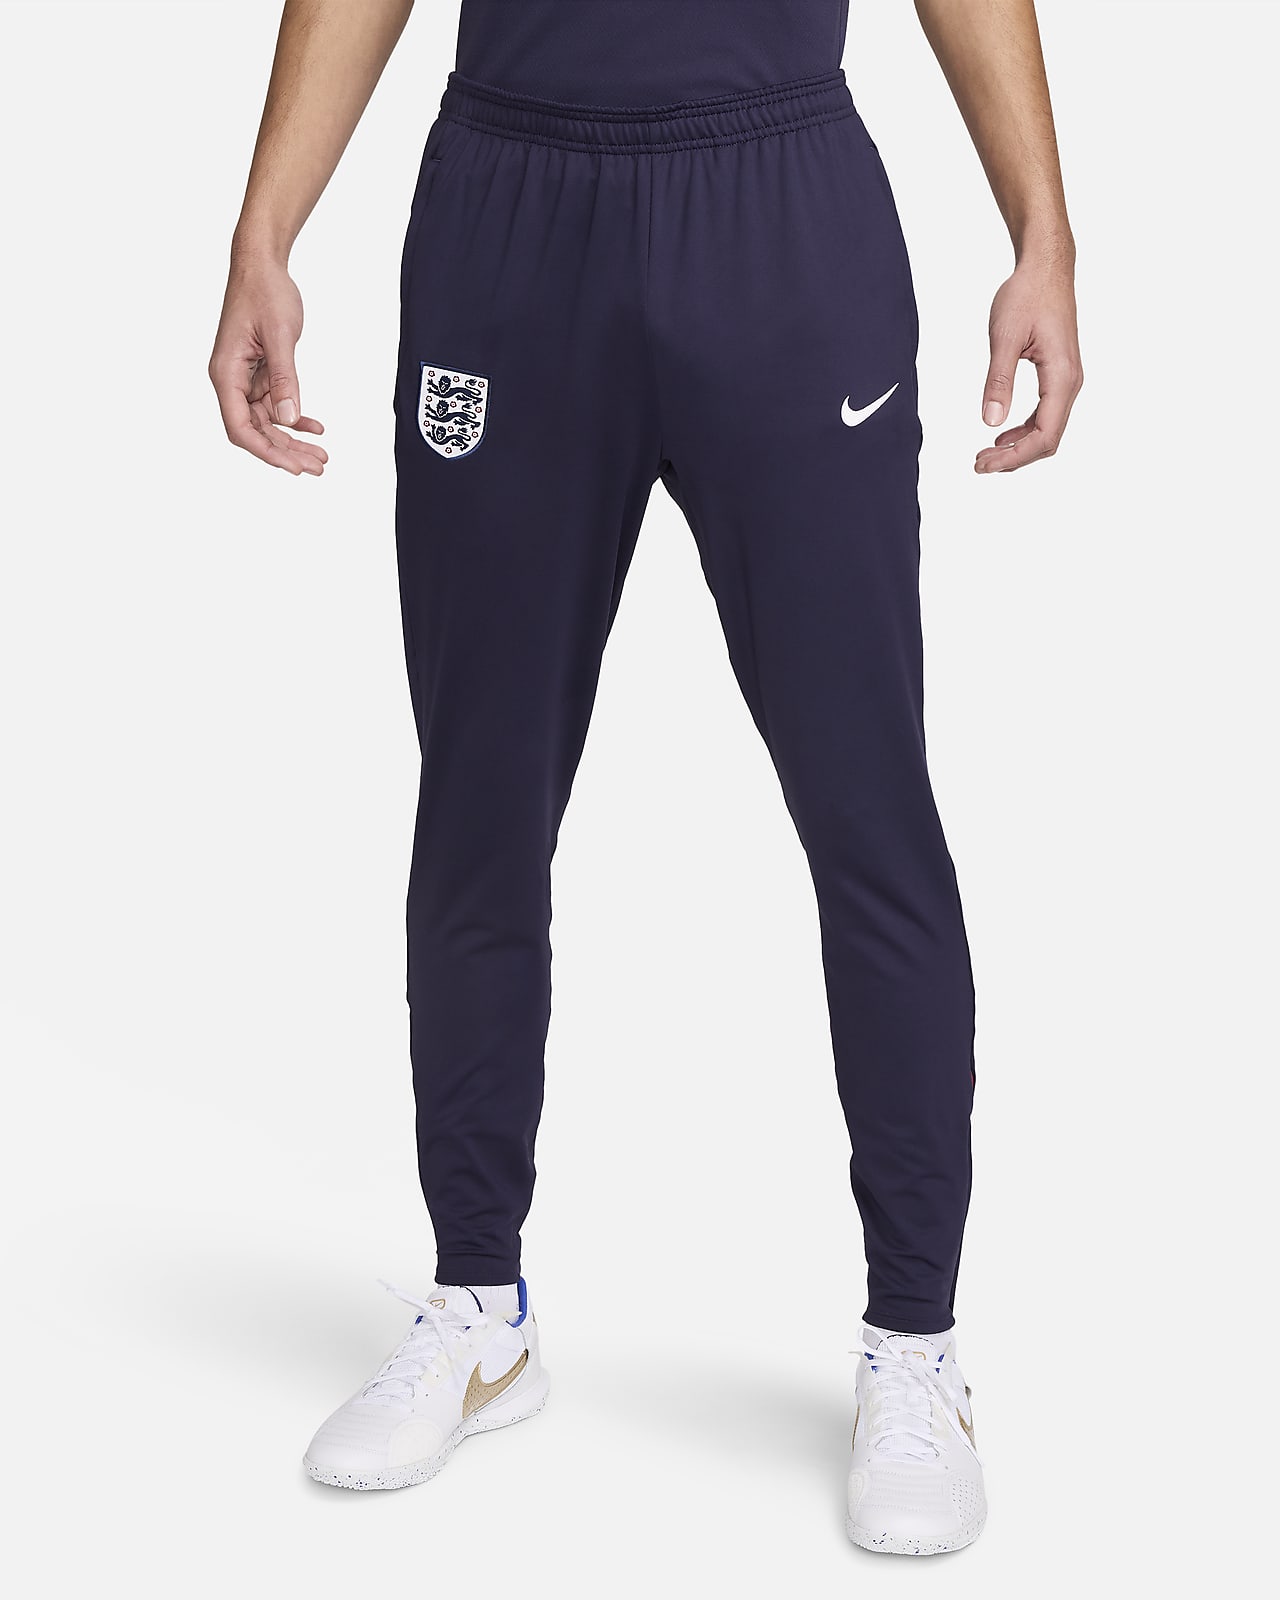 England Strike Men's Nike Dri-FIT Football Knit Pants